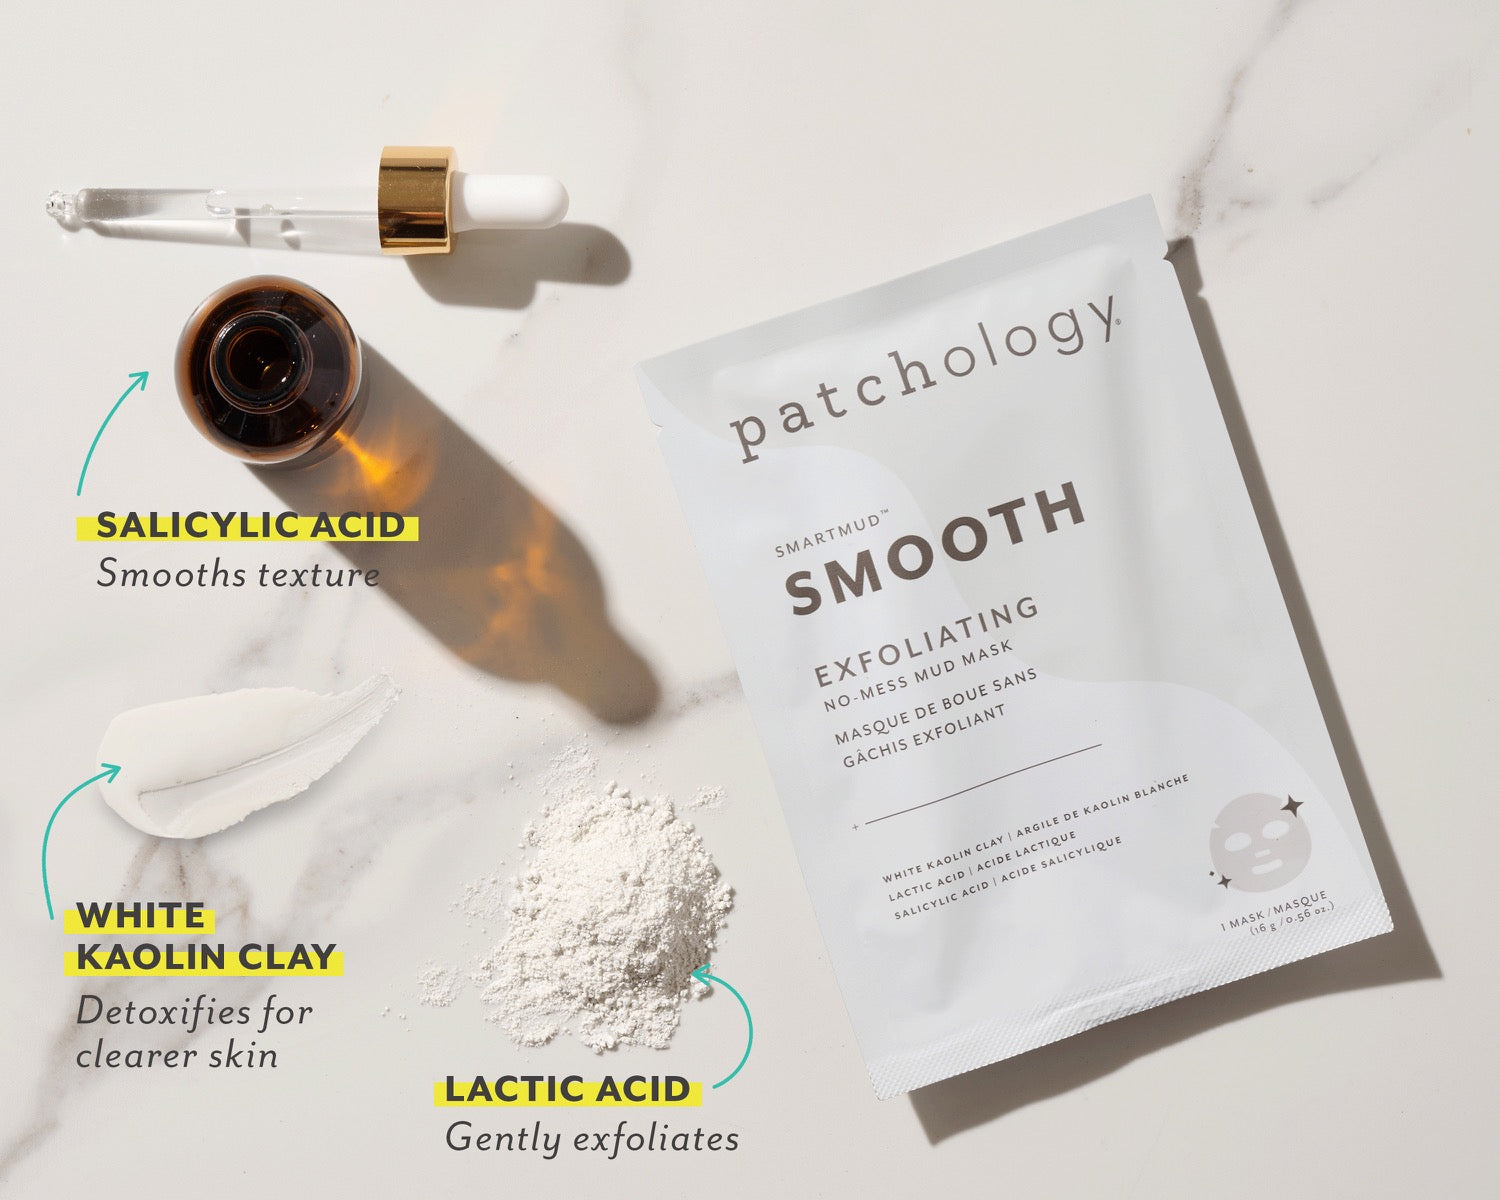 Patchology SmartMud Smooth Exfoliating No-Mess Mud Mask (Single)